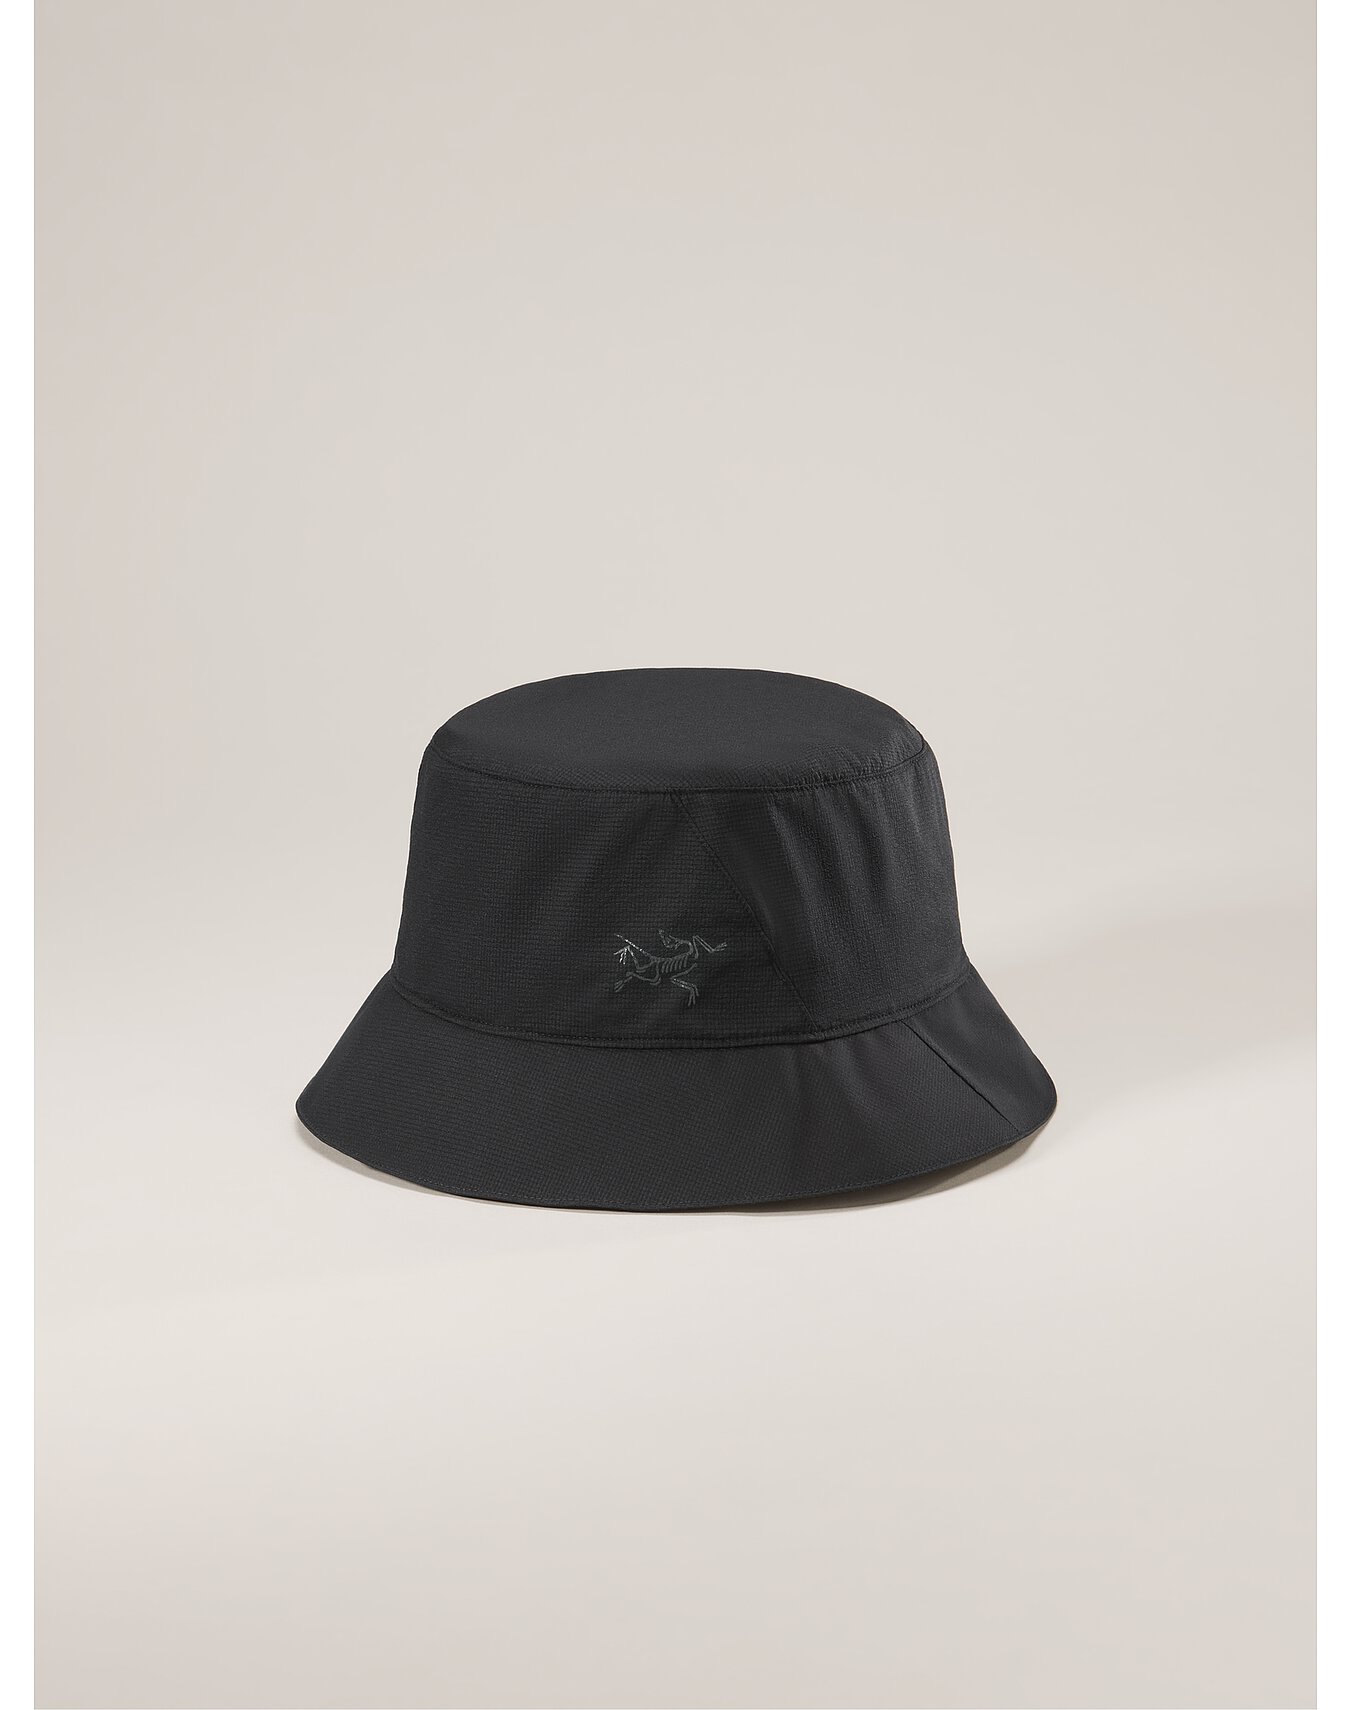 Aerios Bucket Hat | Arc'teryx